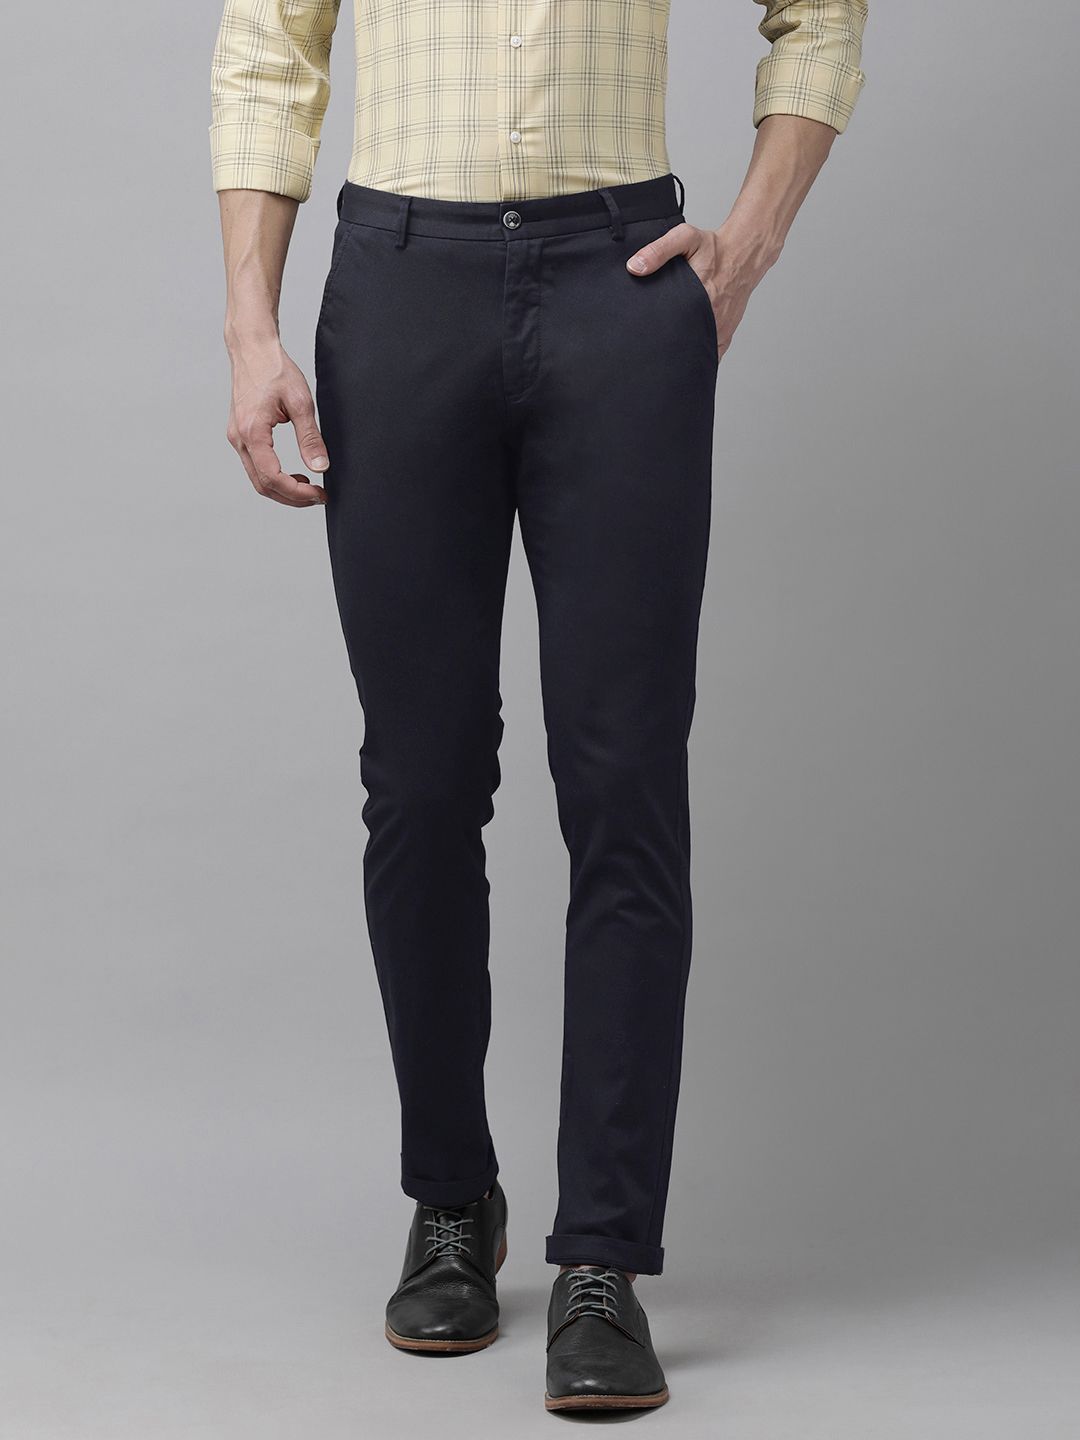 Buy Arrow Mens Micro Check Super Slim Fit Trousers ARAFTR2130Slate Blue  at Amazonin